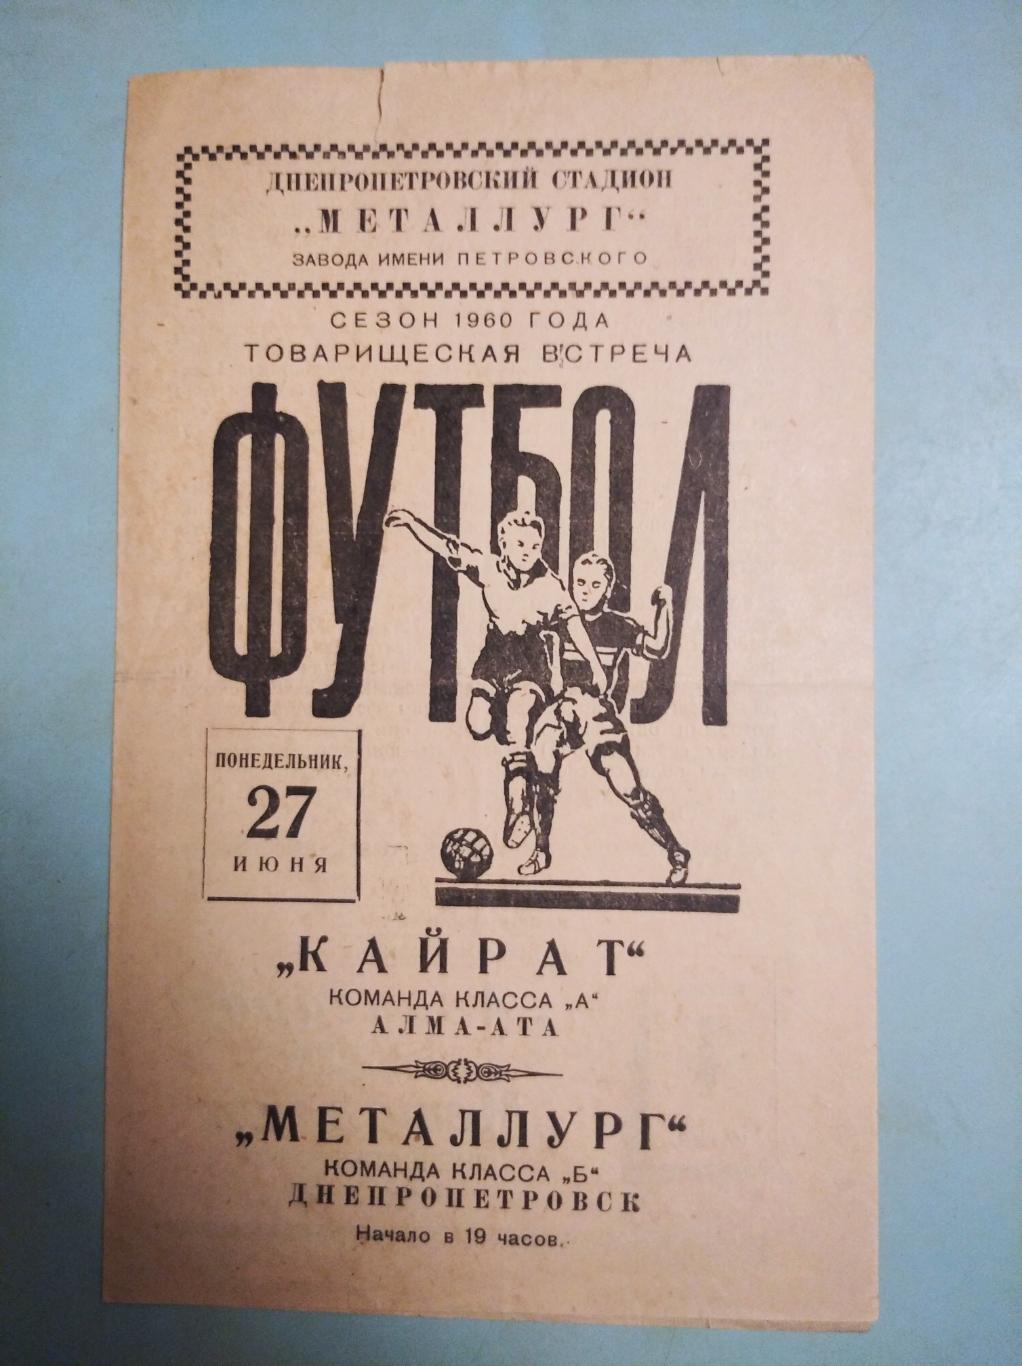 Кайрат Алма-Ата - Металлург Днепропетровск. 27.06.1960